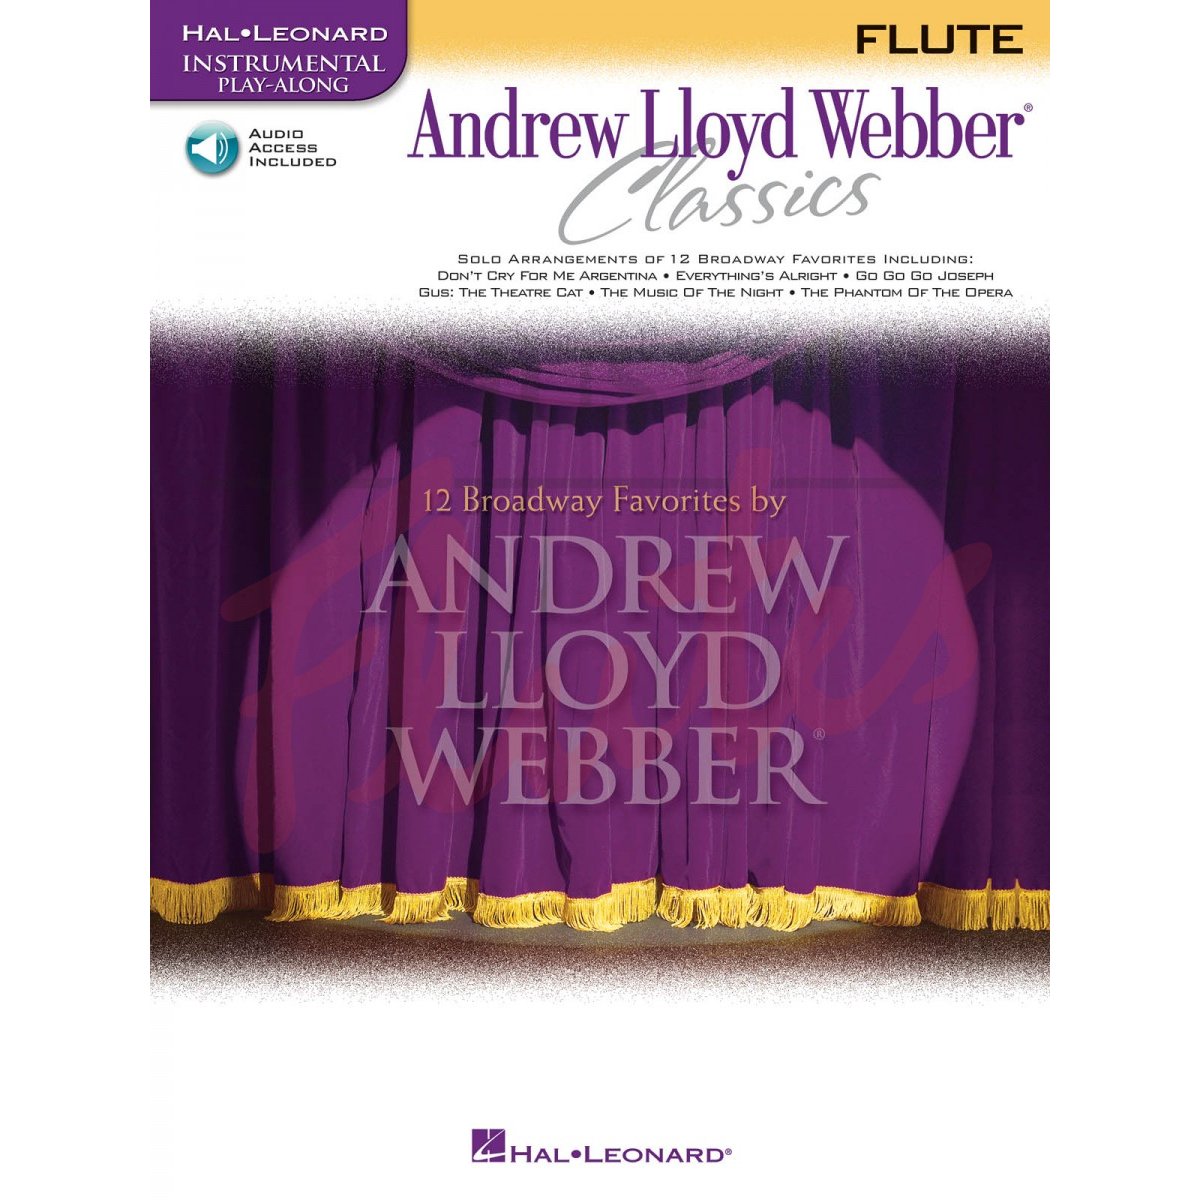 Andrew Lloyd Webber Classics Play-Along for Flute